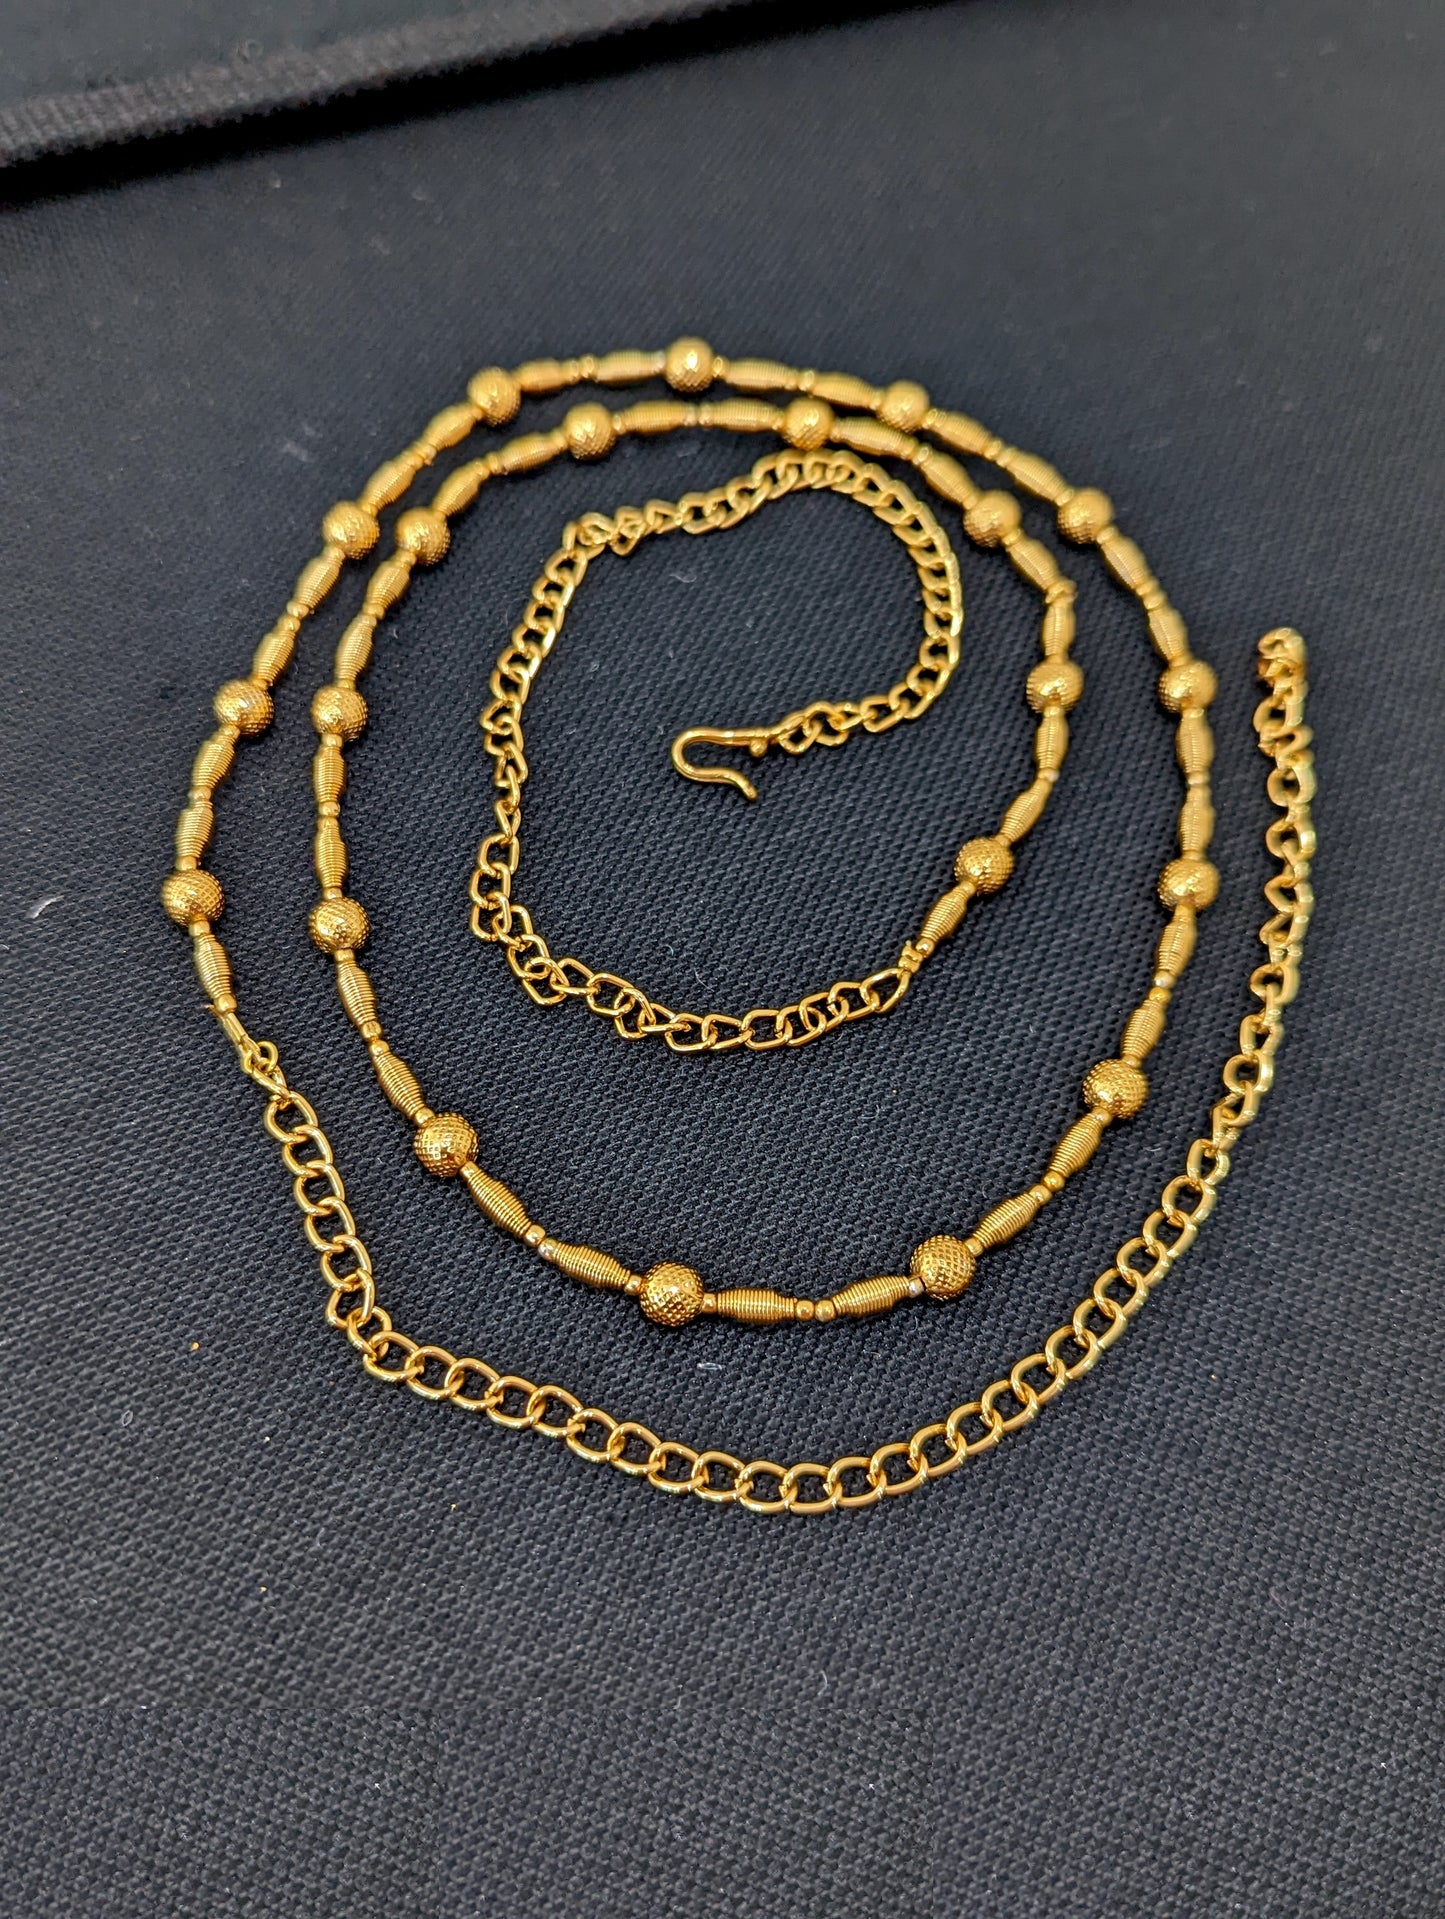 Ghunghru bead Hip Chain / Waist Belt / Belly Chain – Simpliful Jewelry